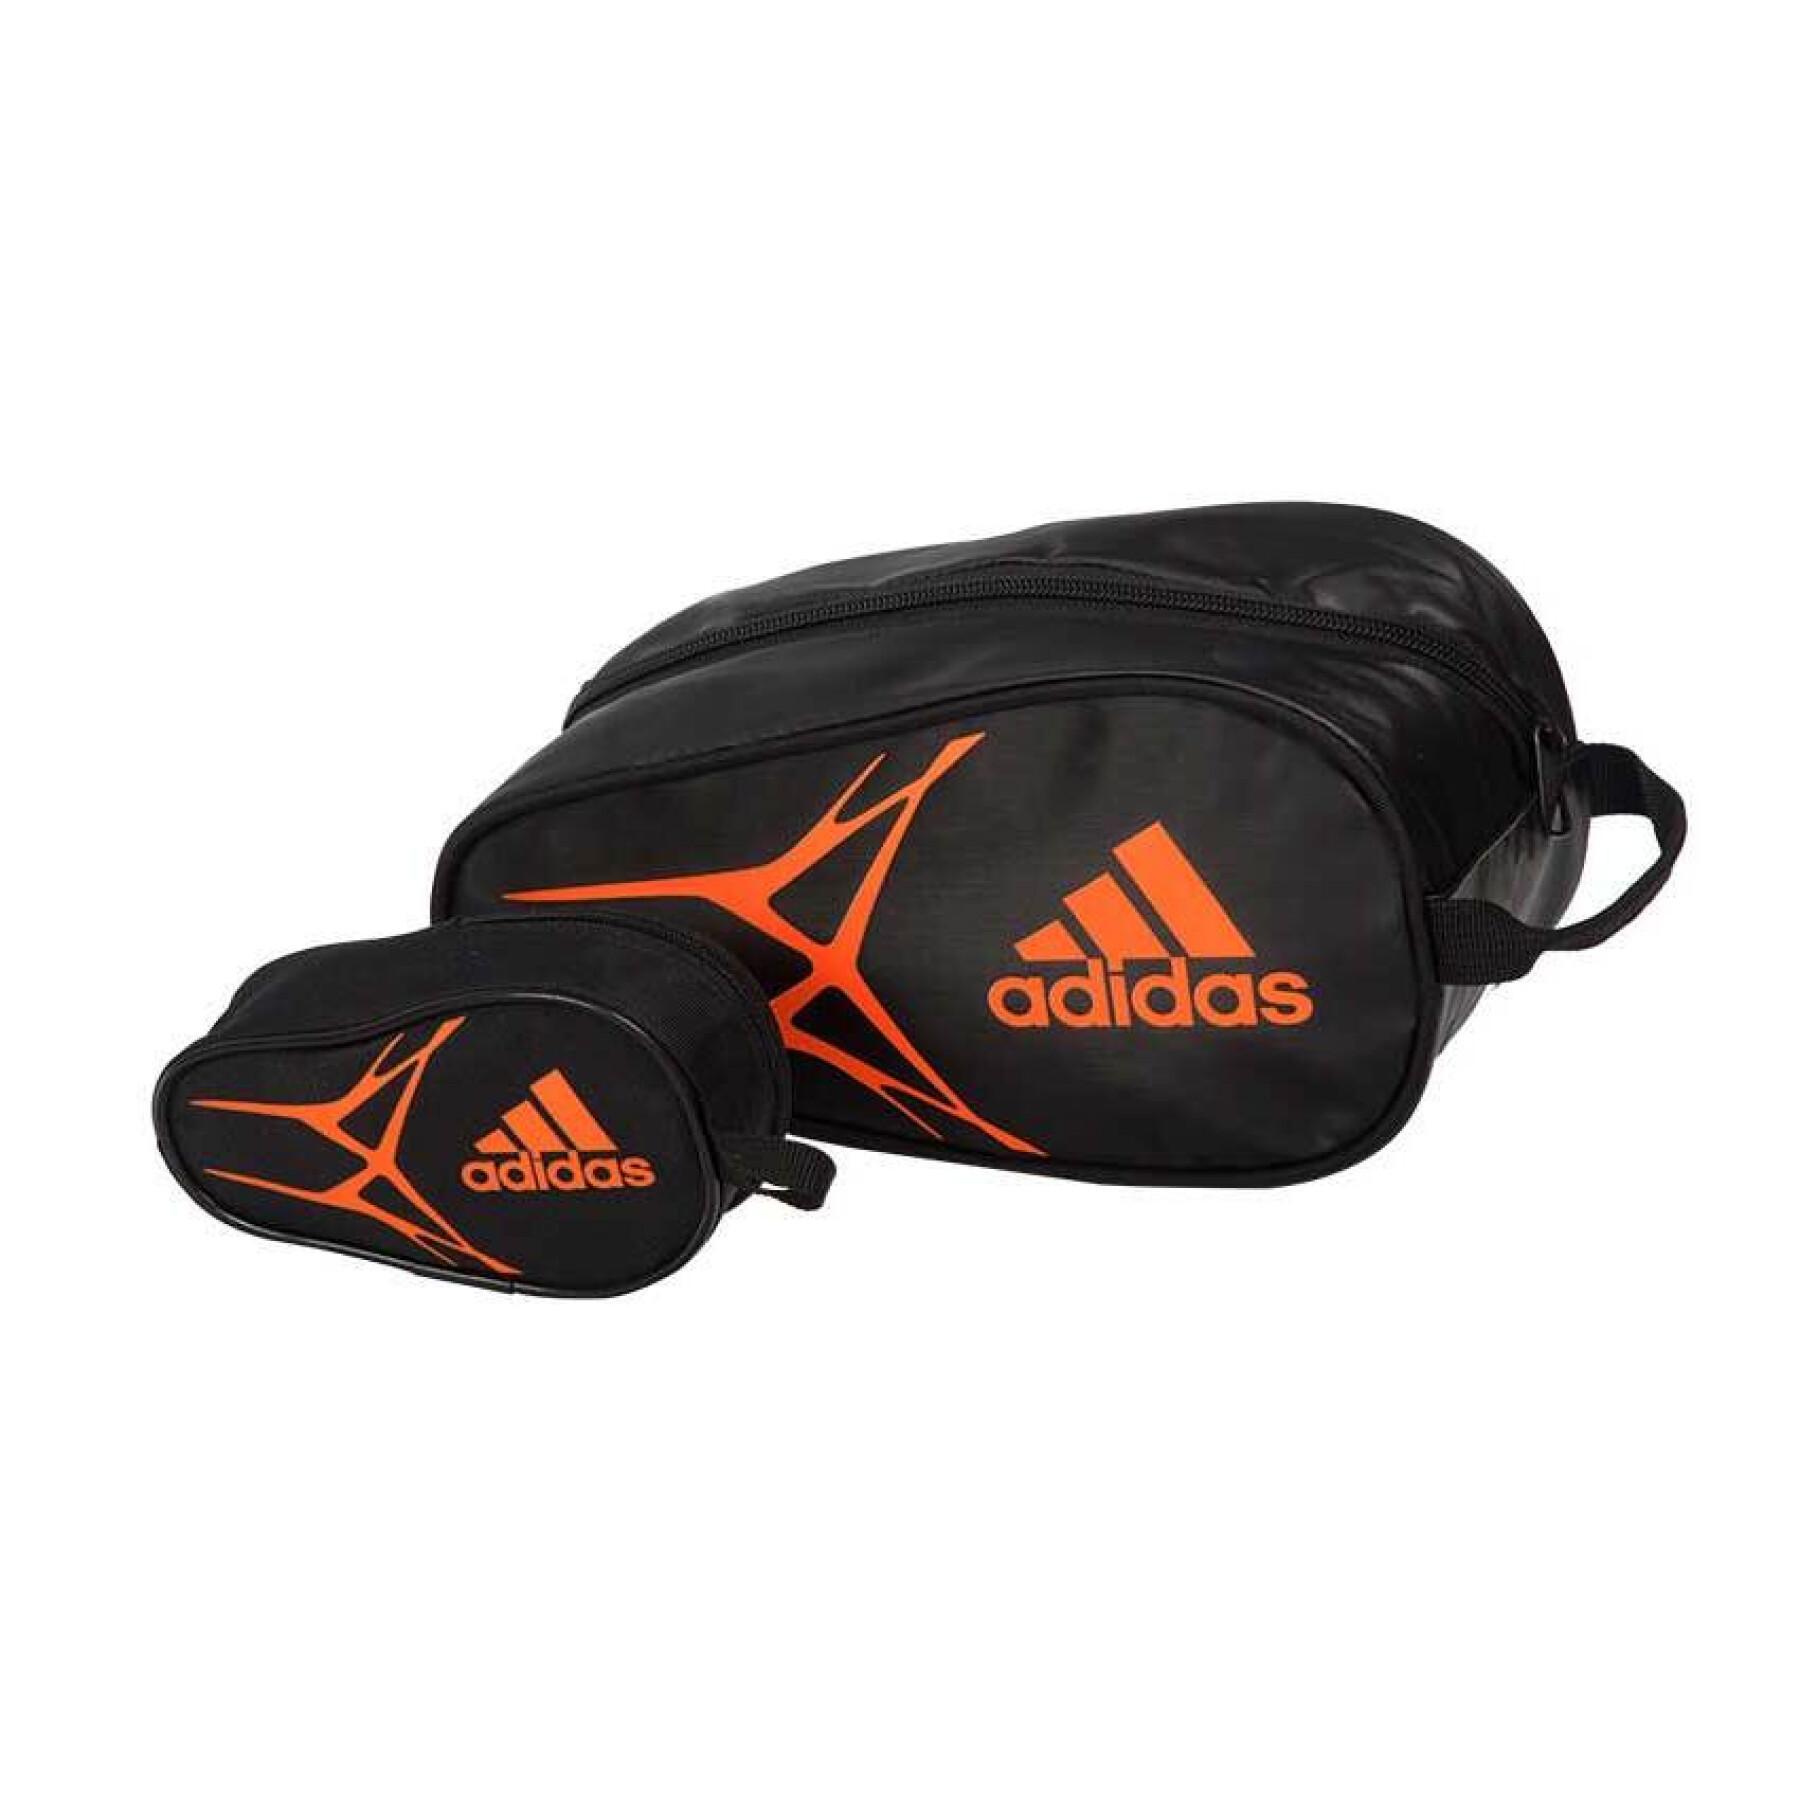 Racket bag from padel adidas Padel